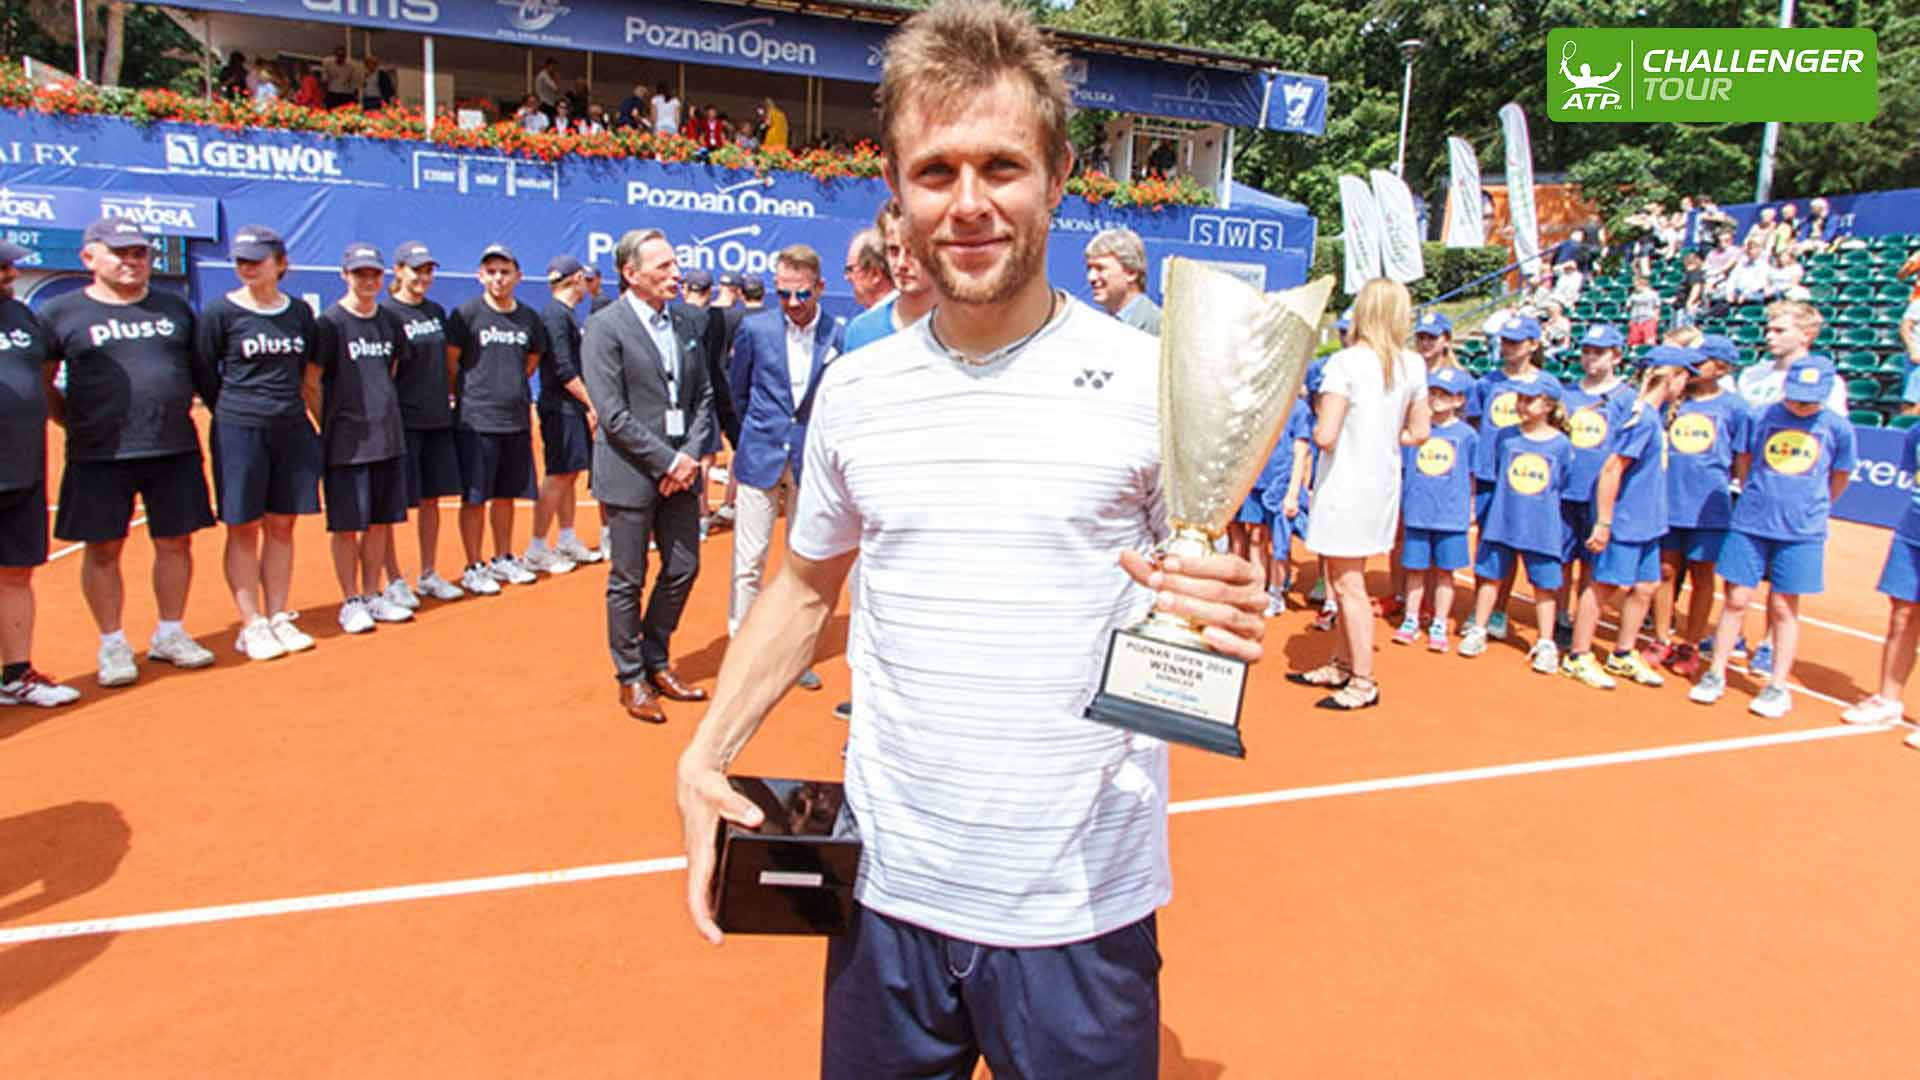 Radu Albot wins his third ATP Challenger Tour title of the year in Poznan.